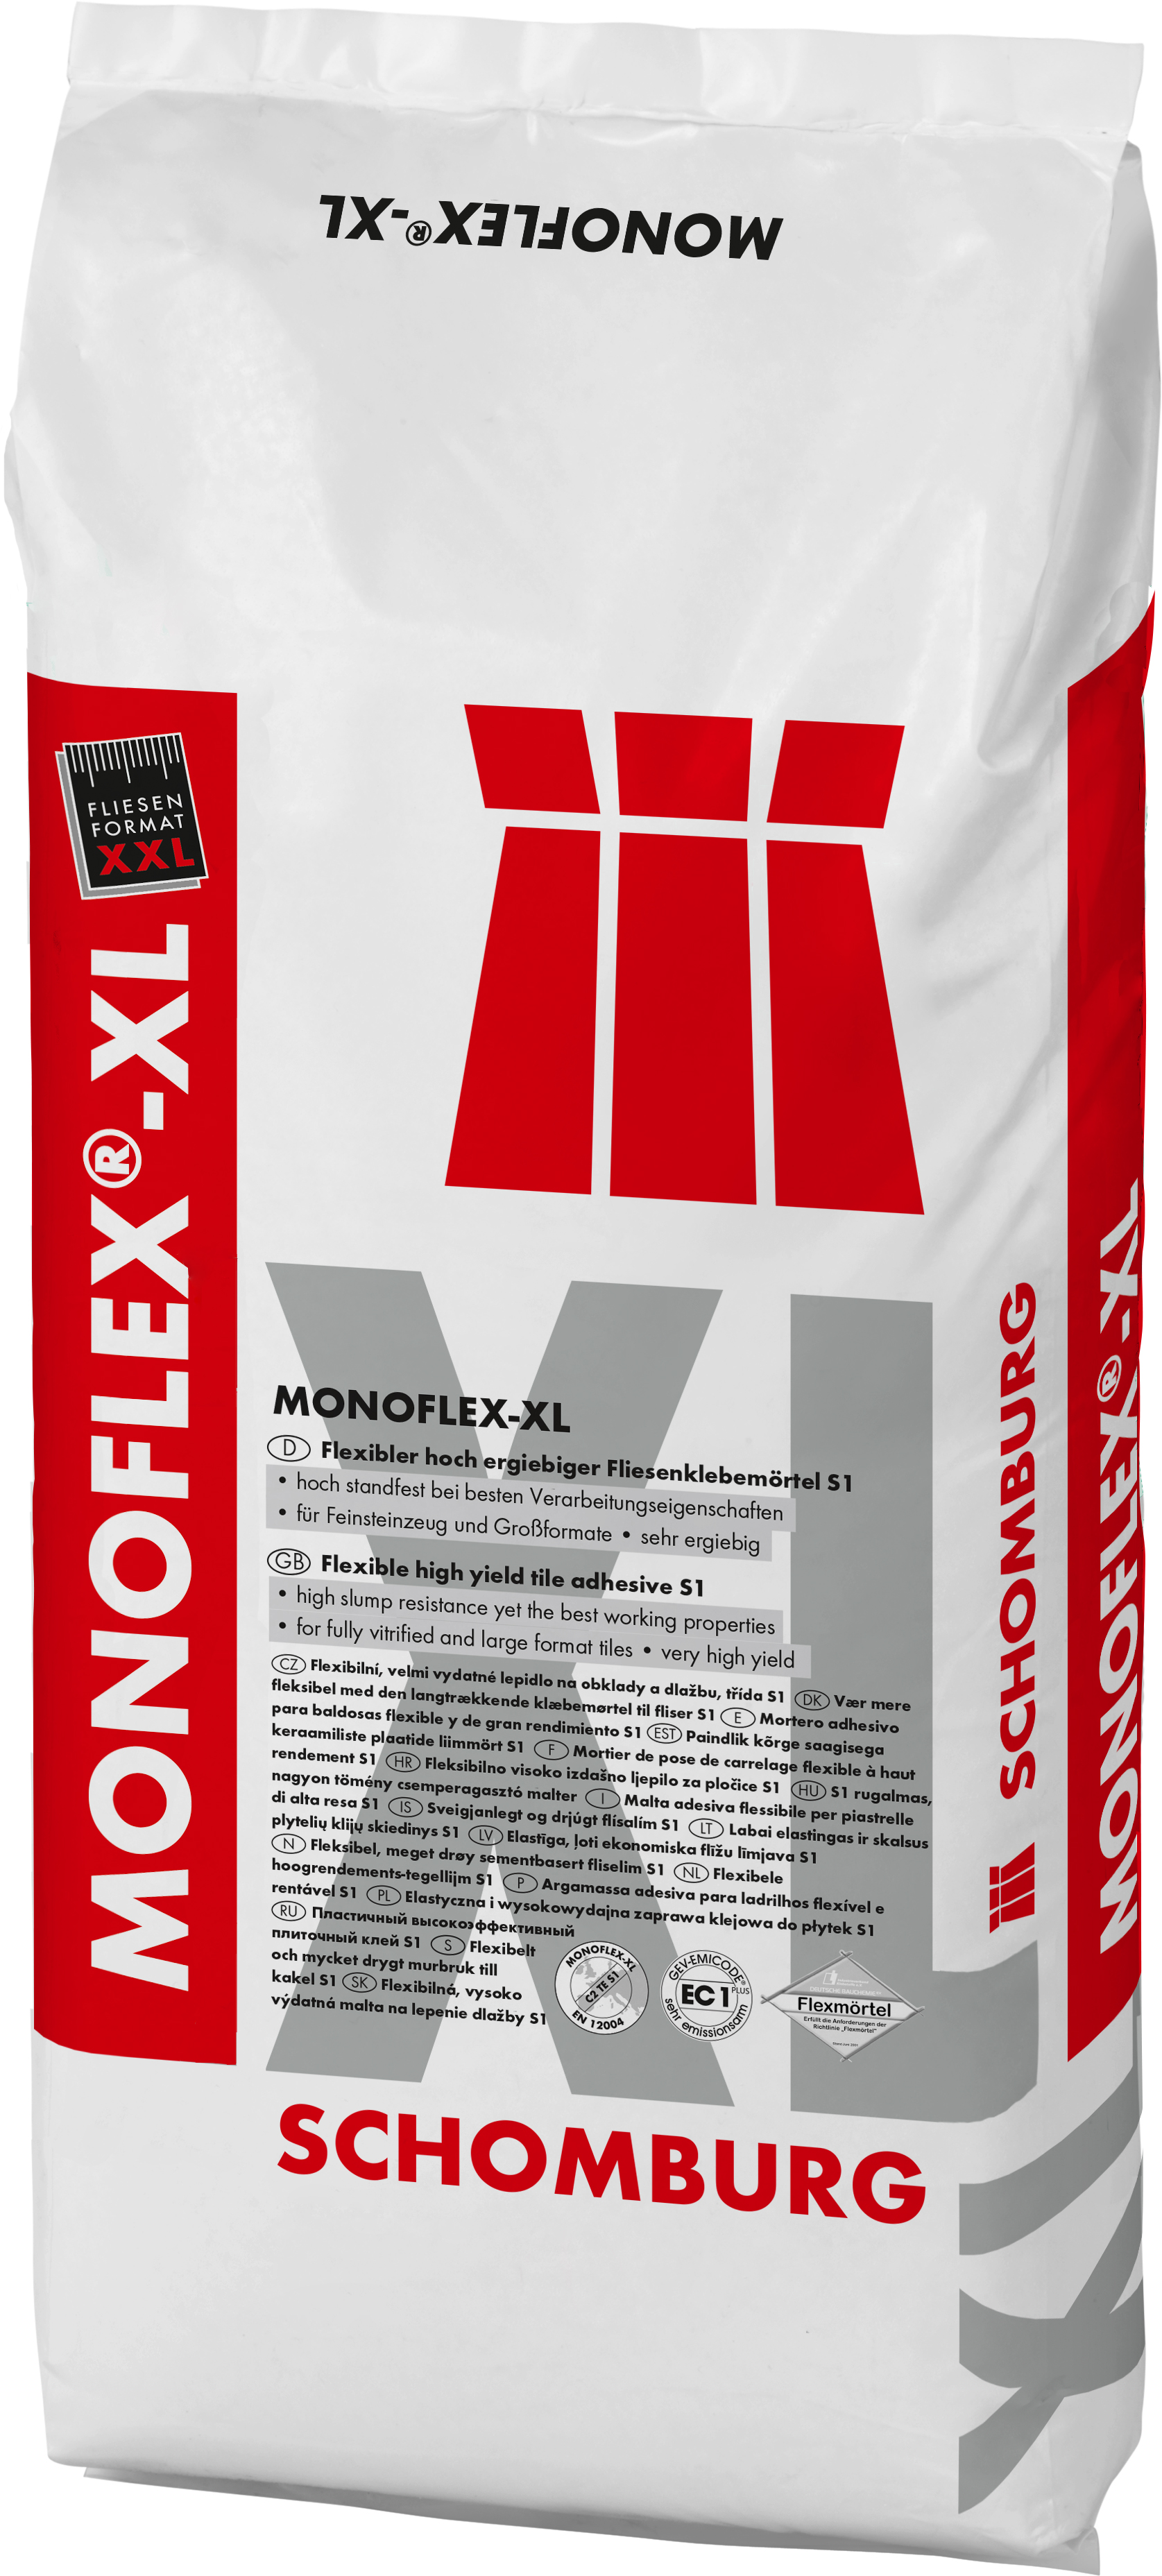 SCHOMBURG Monoflex XL deformovatelné, vysoce vydatné lepidlo 25kg [204302002]